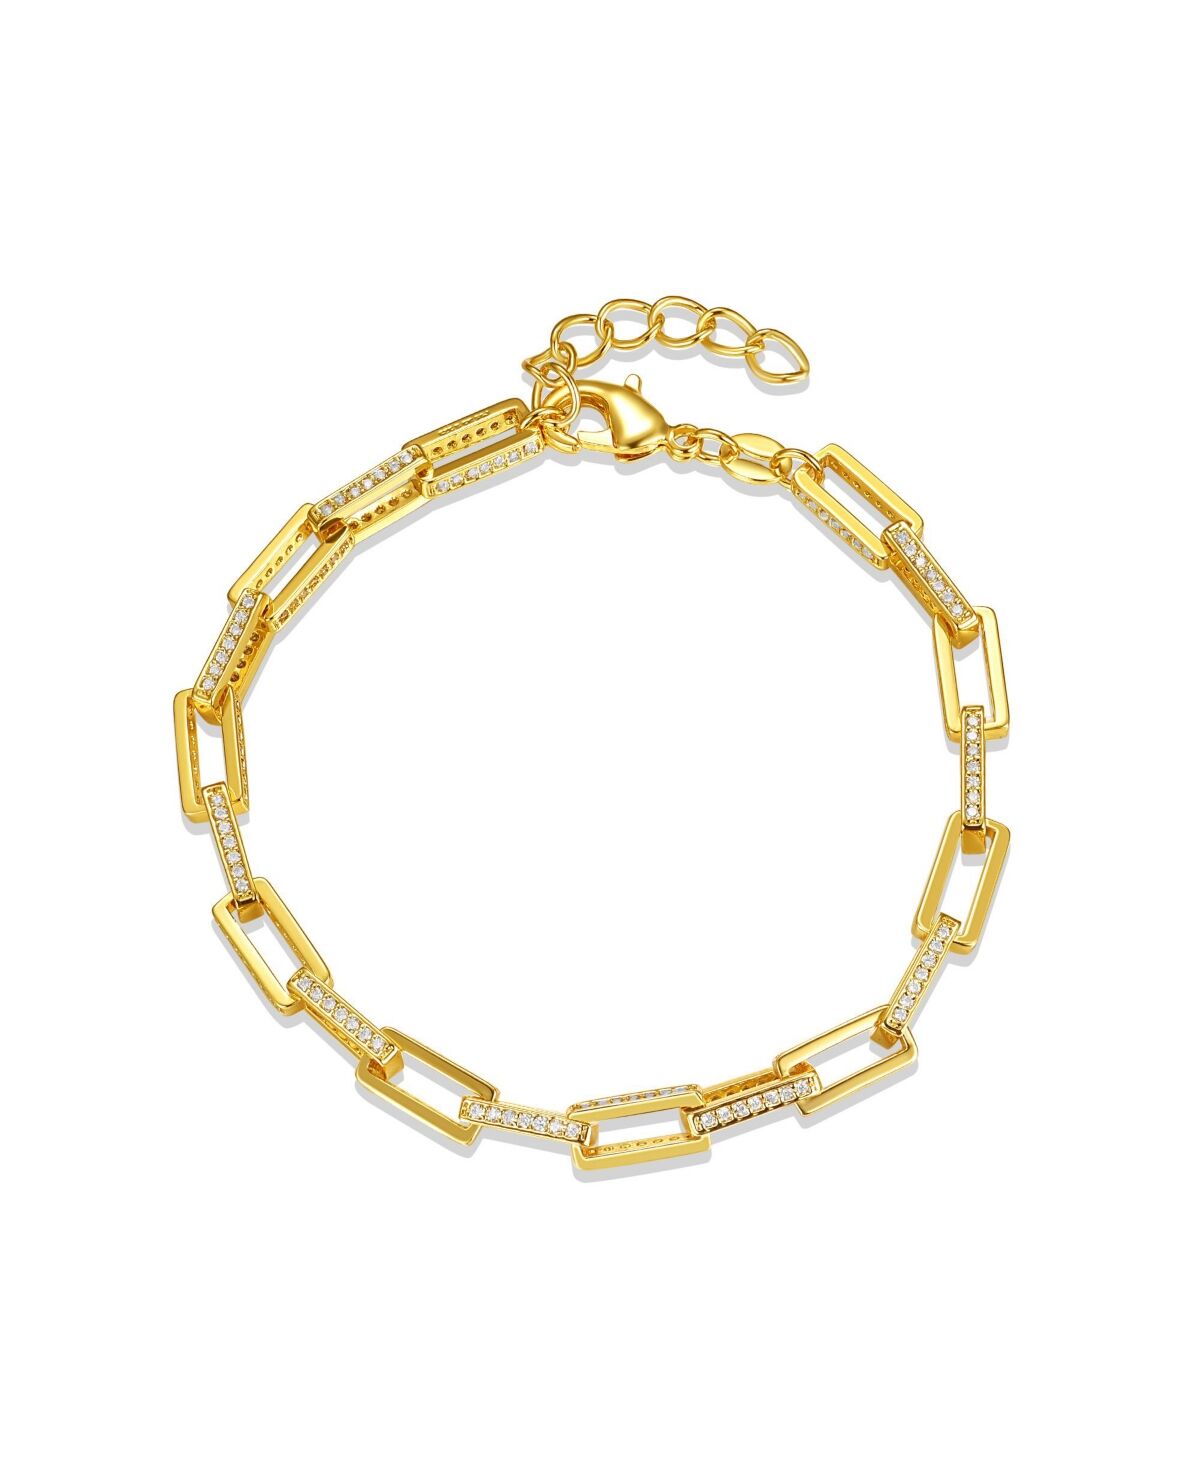 Rachel Glauber 14k Gold Plated with Cubic Zirconia Rectangular Cable Link Adjustable Bracelet - Gold